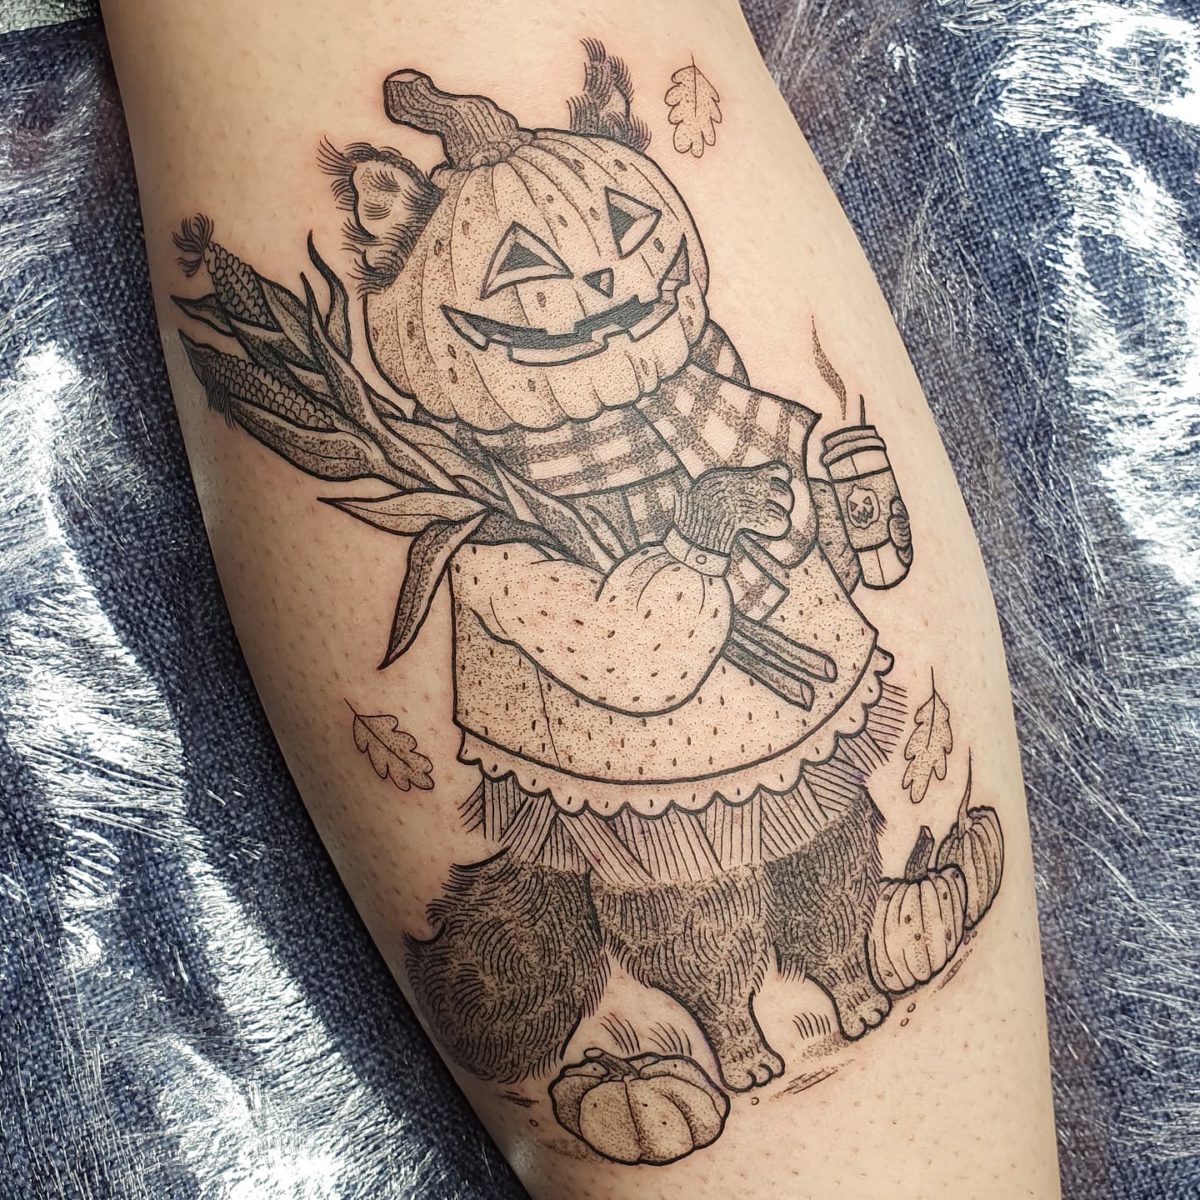 Pumpkin Spice Latte Tattoos